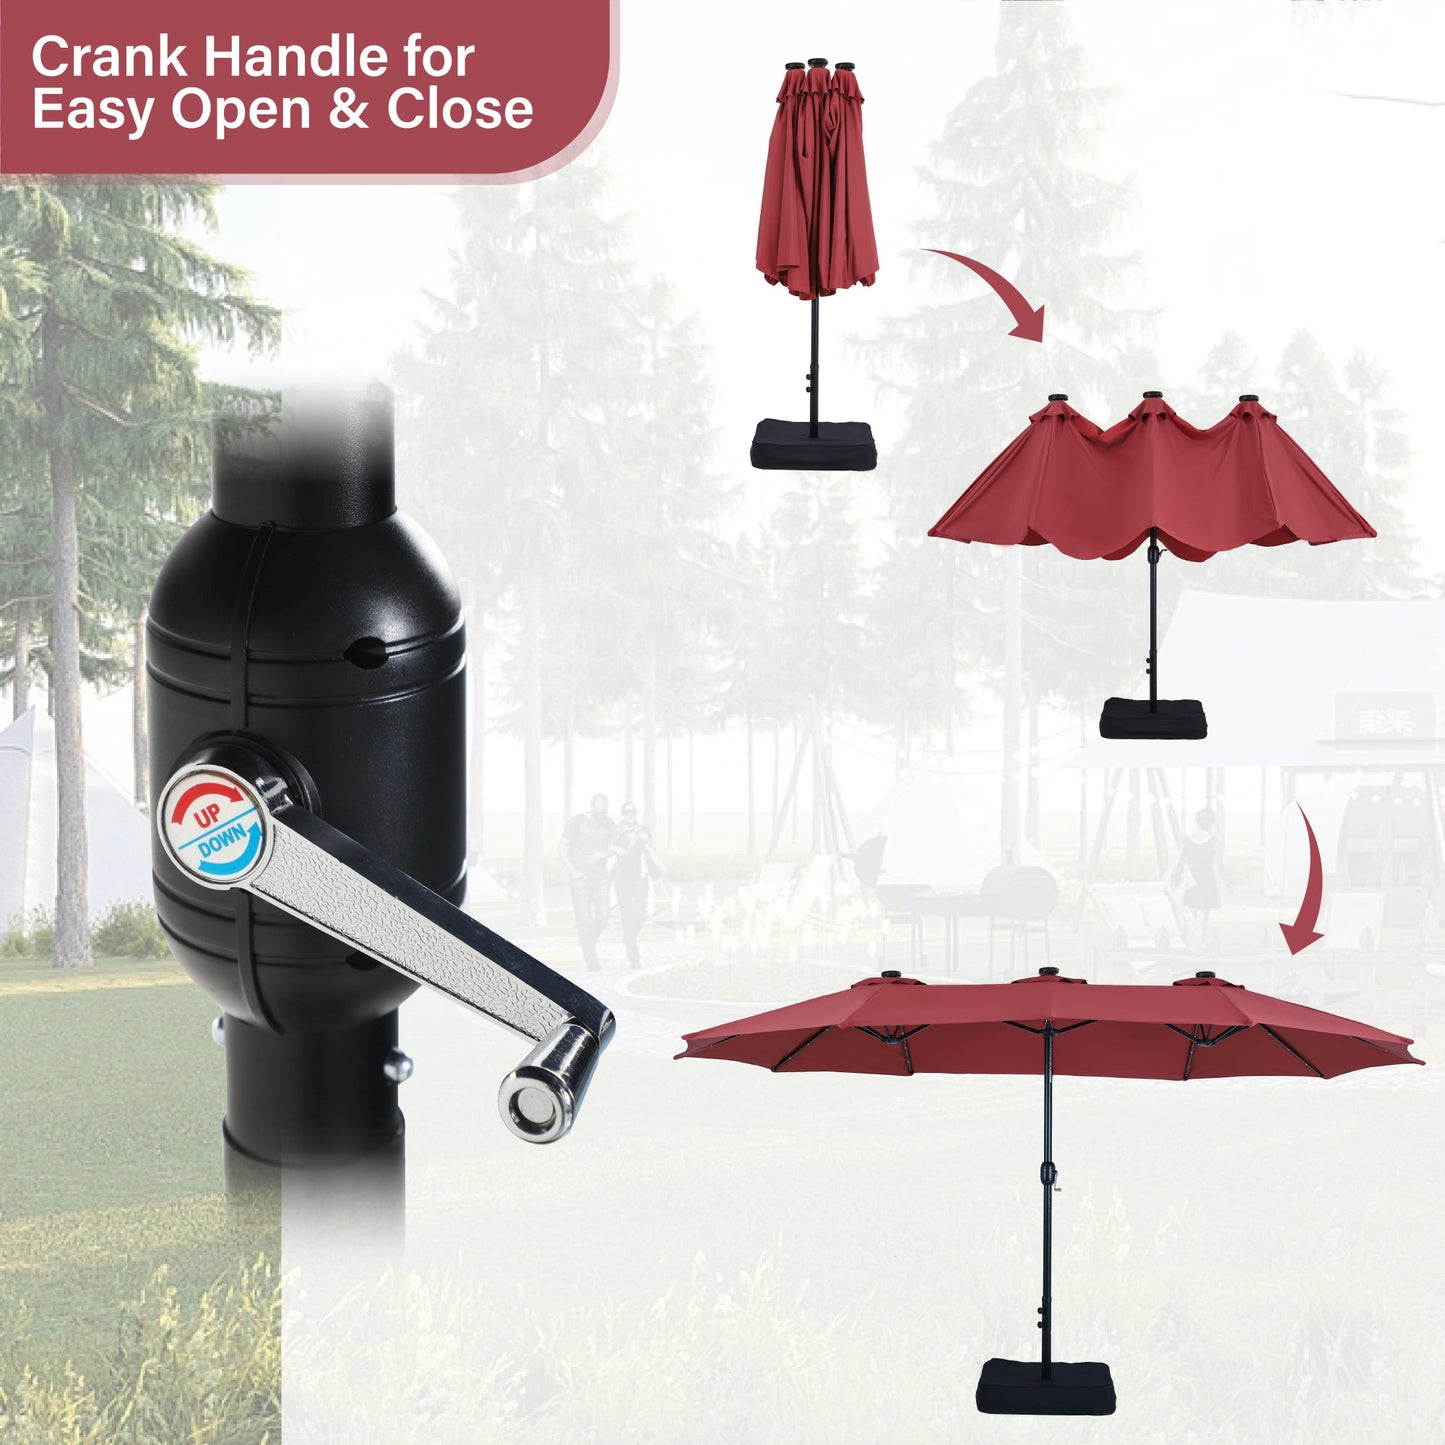 Sophia & William 15FT Outdoor Patio Umbrella Extra Large Double-Sided Garden Umbrella with Crank Handle, Red